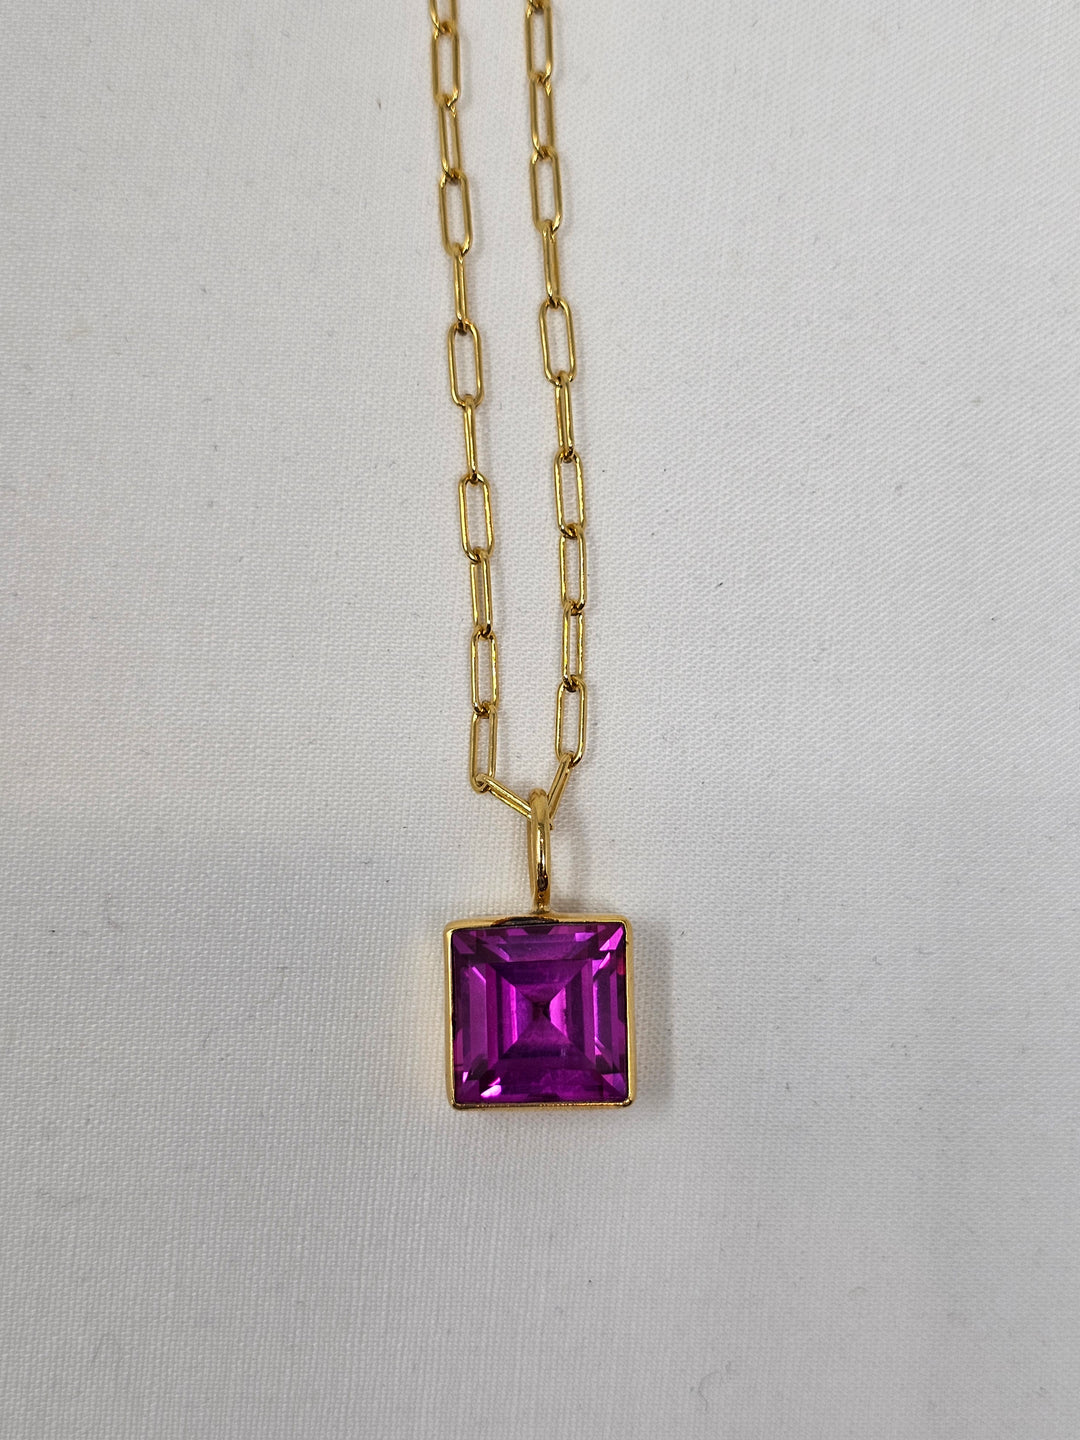 Dina Mackney Mini Charm Necklace Pink Sapphire